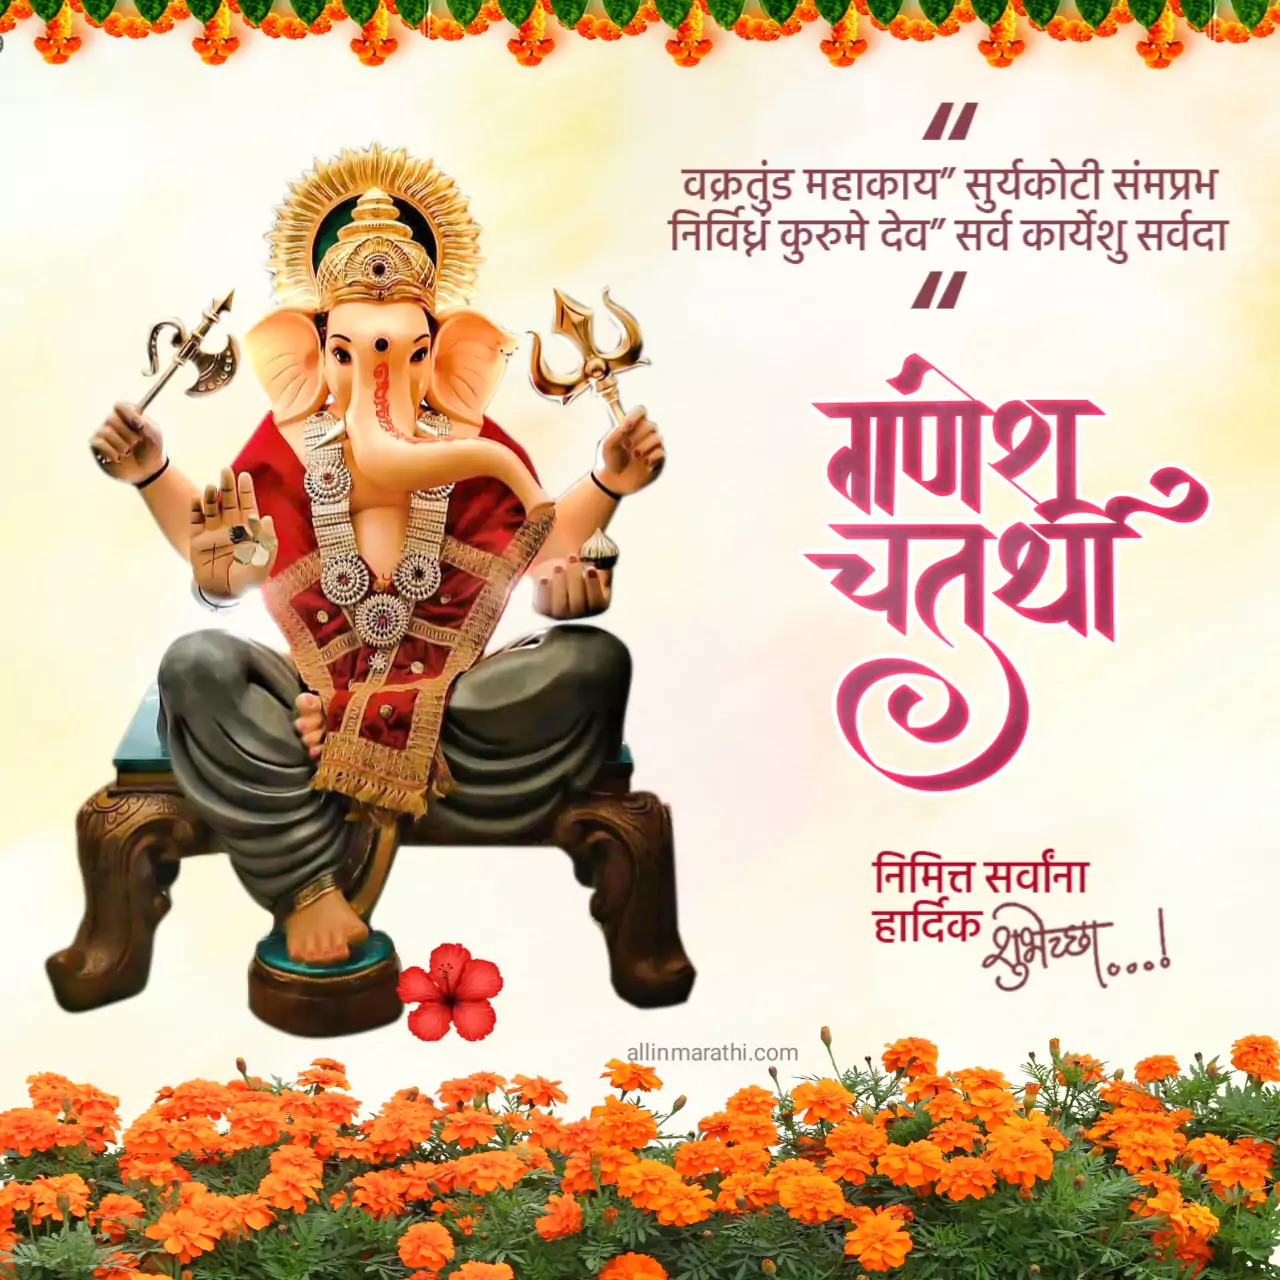 Ganesh chaturthi wishes in marathi 2023, गणेश चतुर्थी शुभेच्छा मराठी